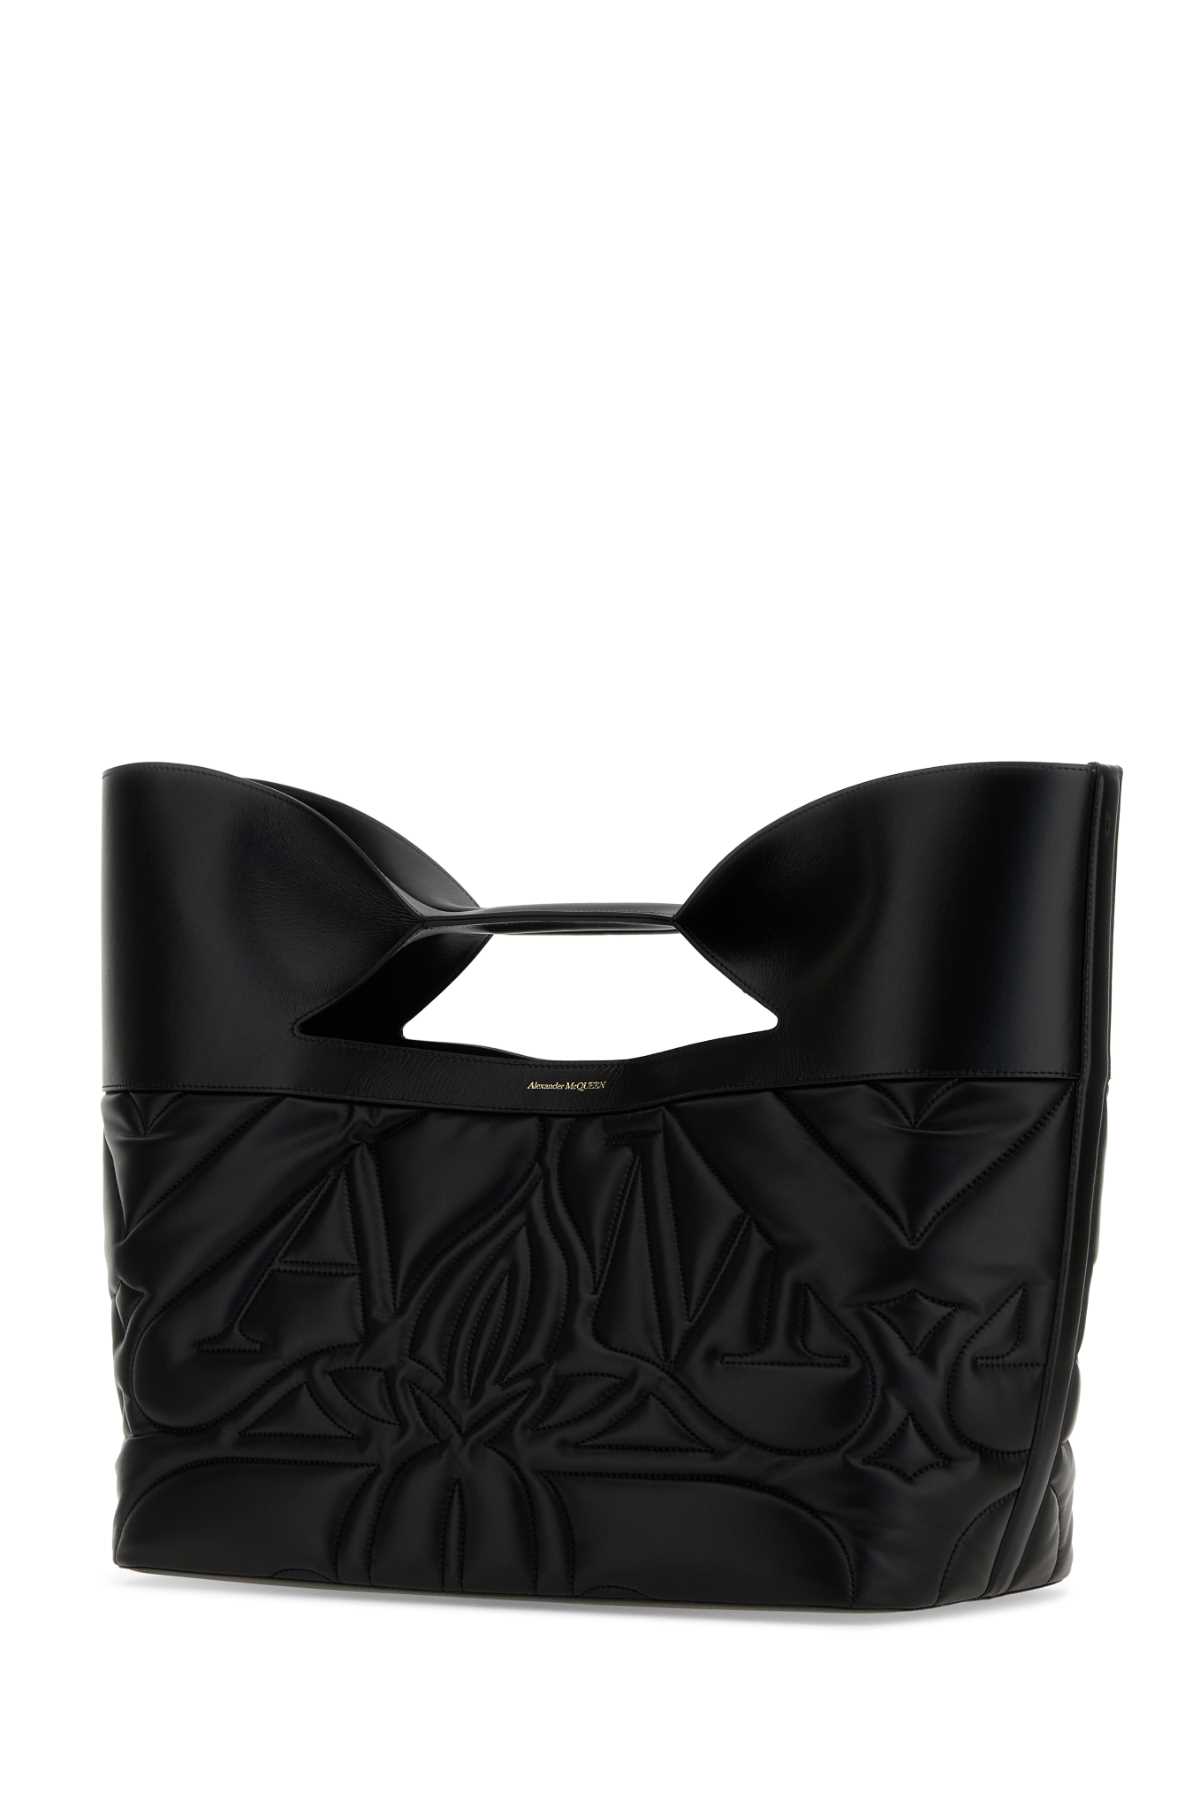 Alexander Mcqueen Black Leather Medium The Bow Handbag